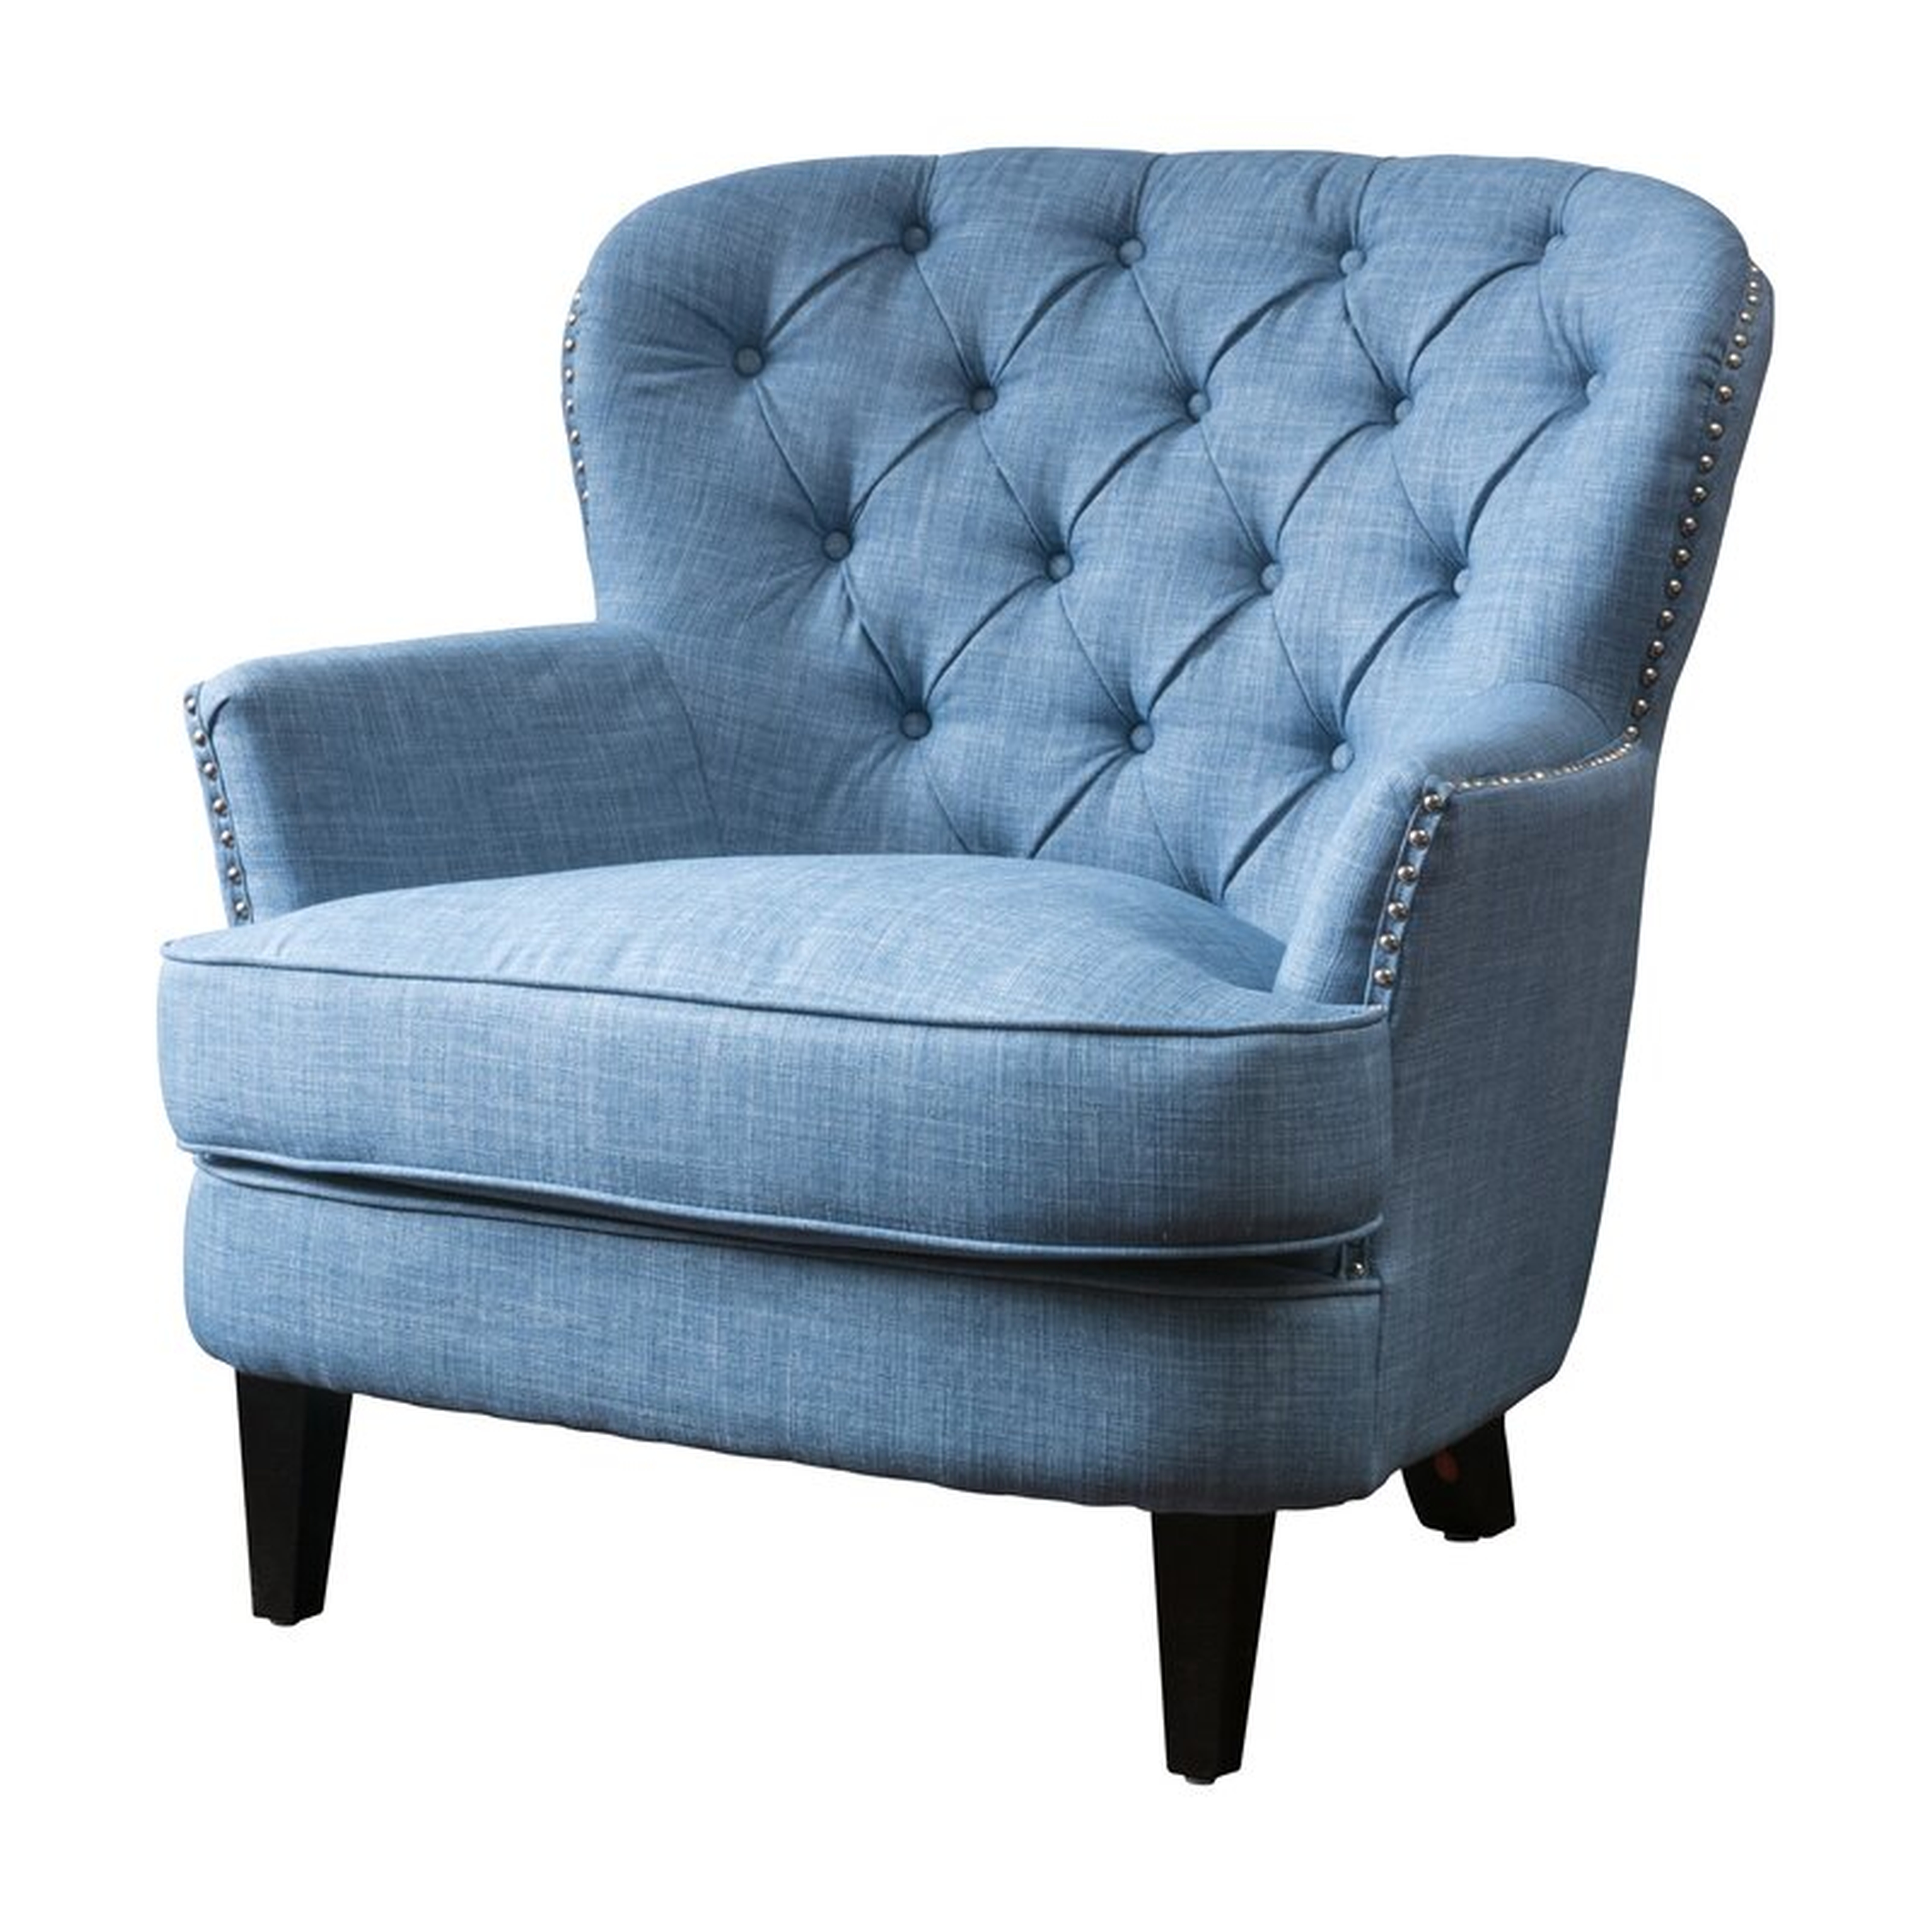 Parmelee 33" Wide Tufted Linen Club Chair, Blue - Wayfair